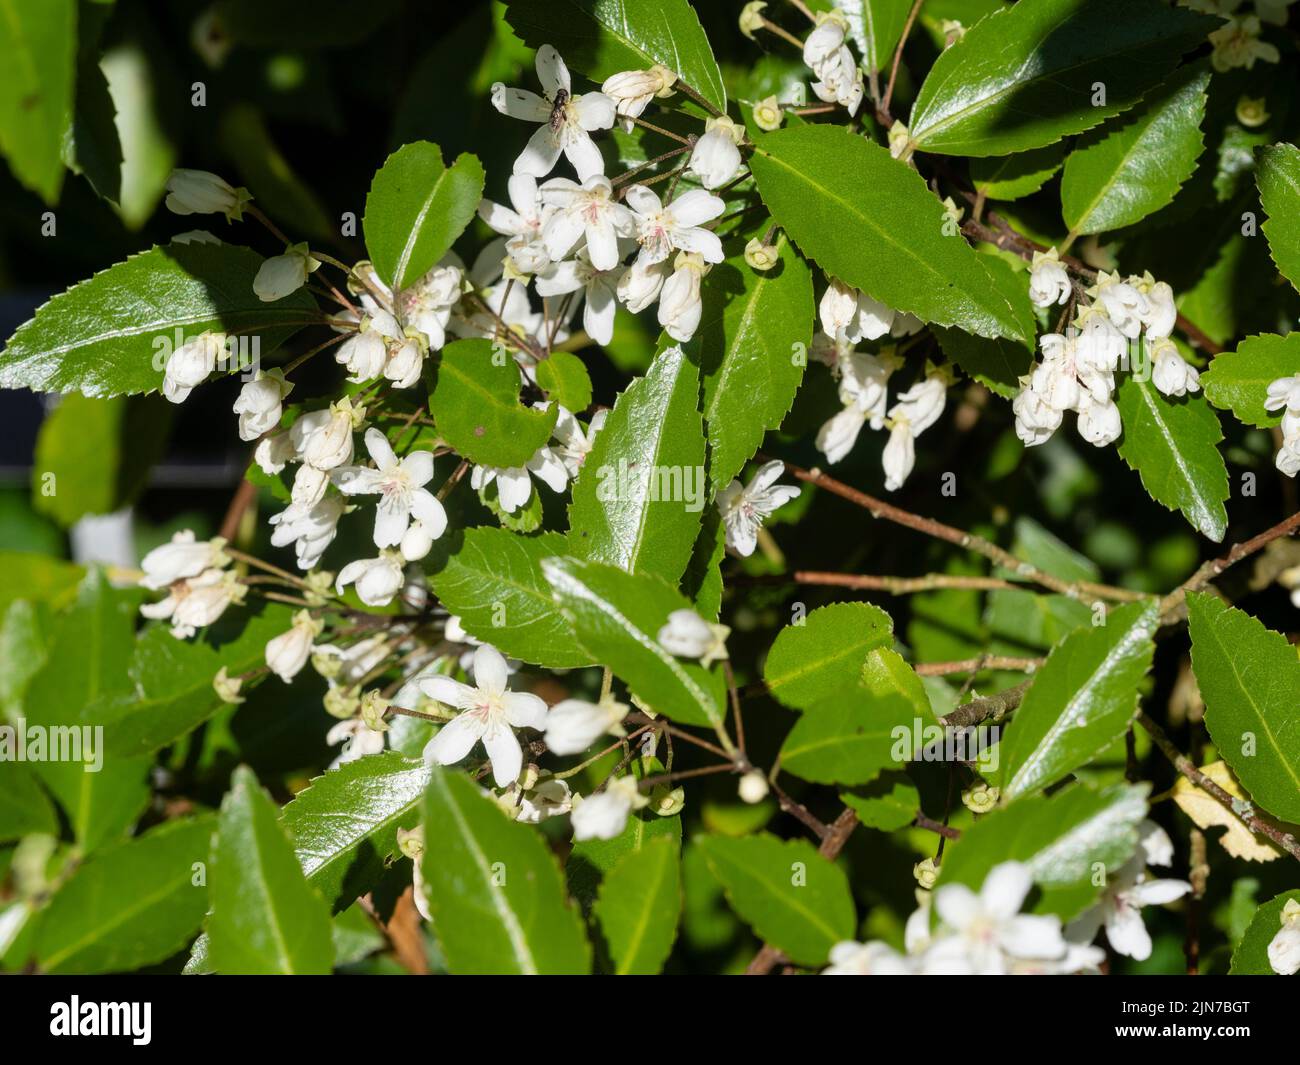 White, later summer flowers of the hardy evergreen New Zealand ribbonwood, Hoheria sexstylosa 'Stardust' Stock Photo